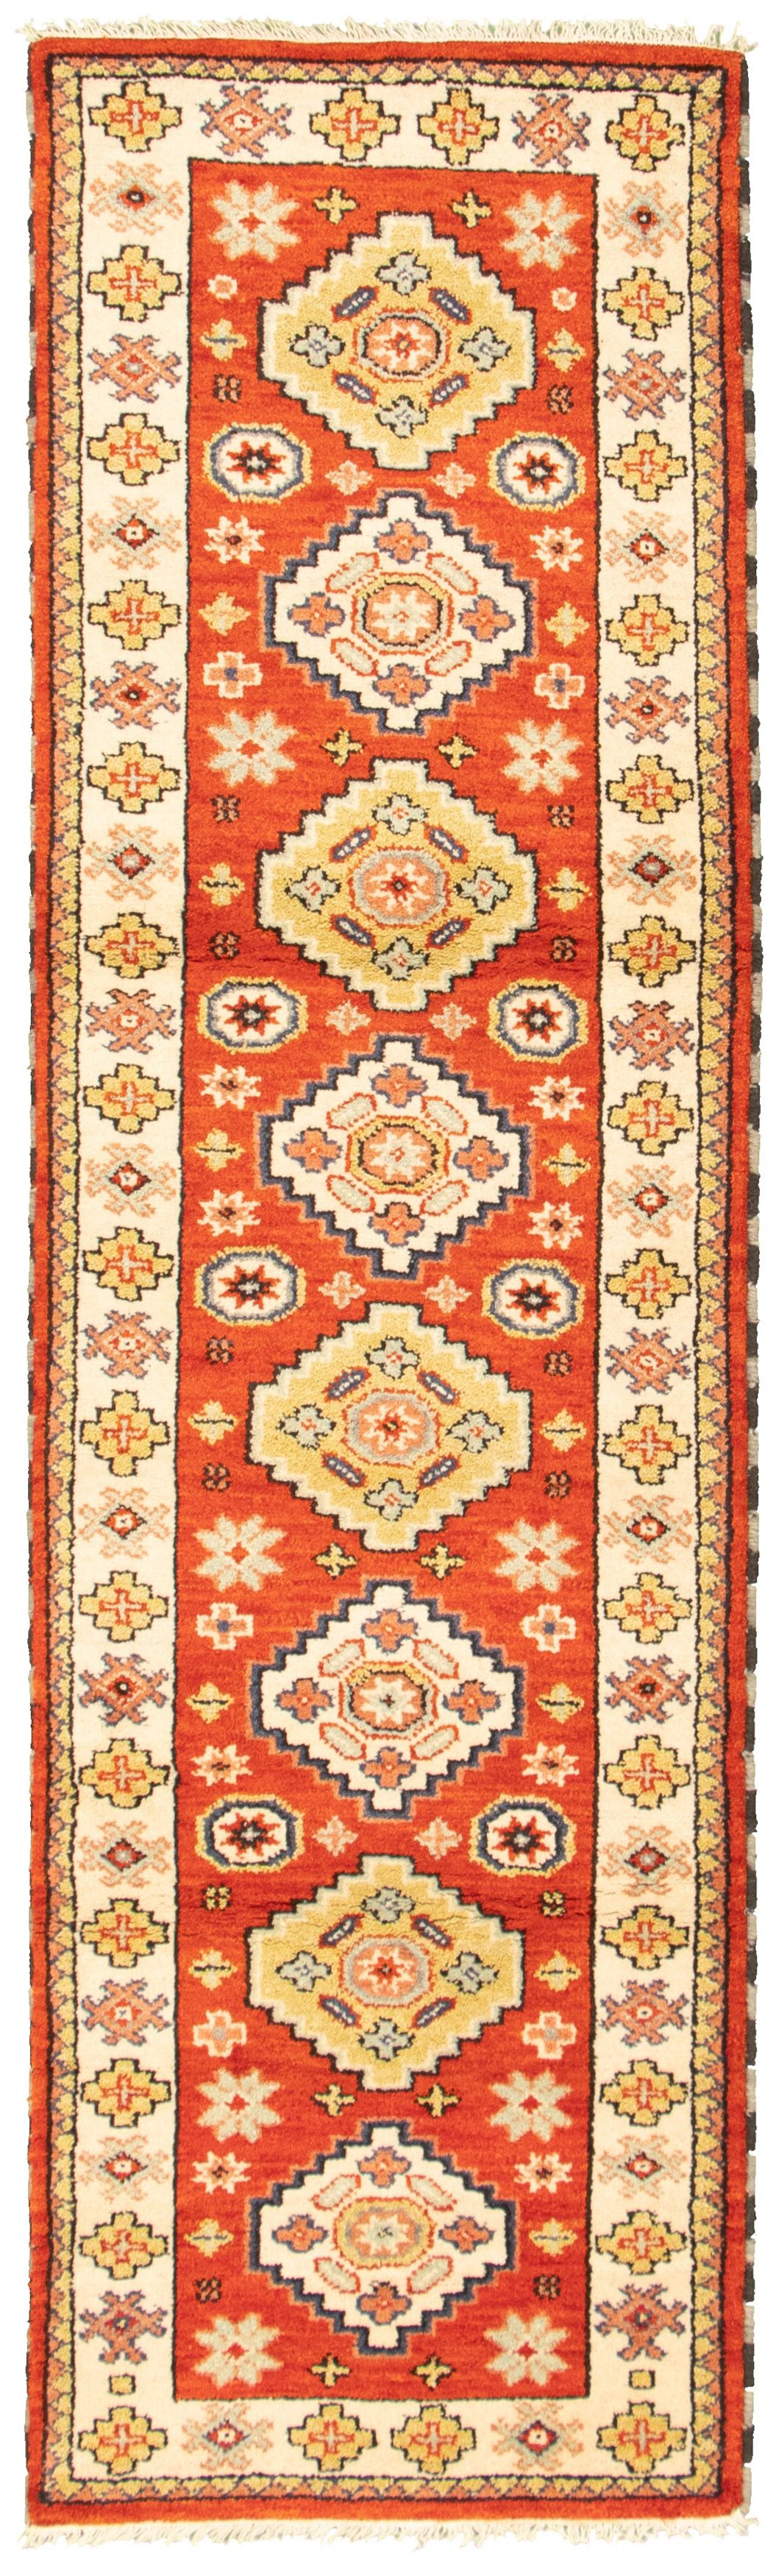 Hand-knotted Royal Kazak Dark Copper Wool Rug 2'9" x 9'6" Size: 2'9" x 9'6"  